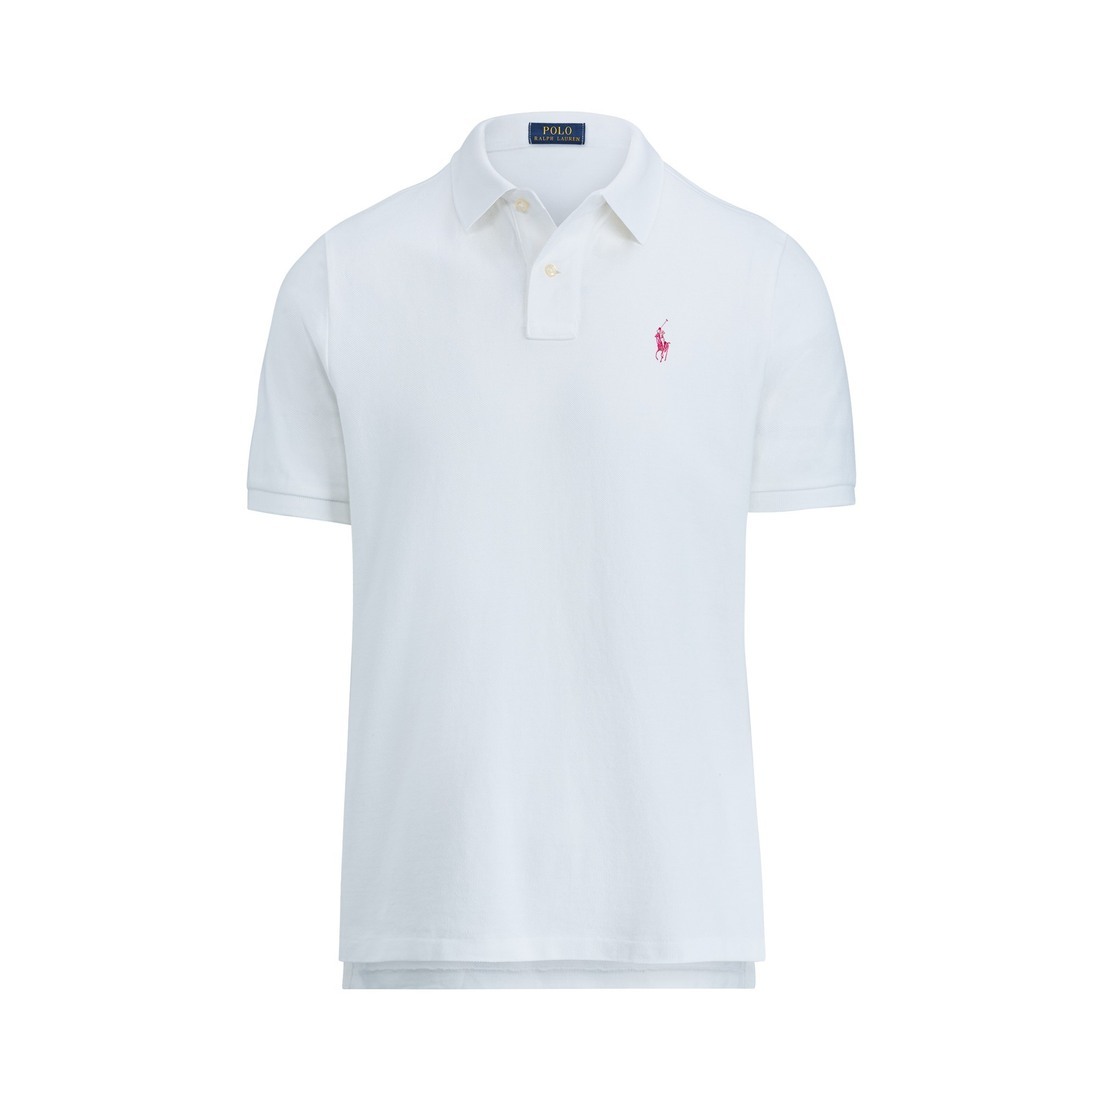 Kleding Unisex kinderkleding Tops & T-shirts Overhemden en buttondowns Uitstekende Jonge geitjes Ralph Lauren Marine Rugby 